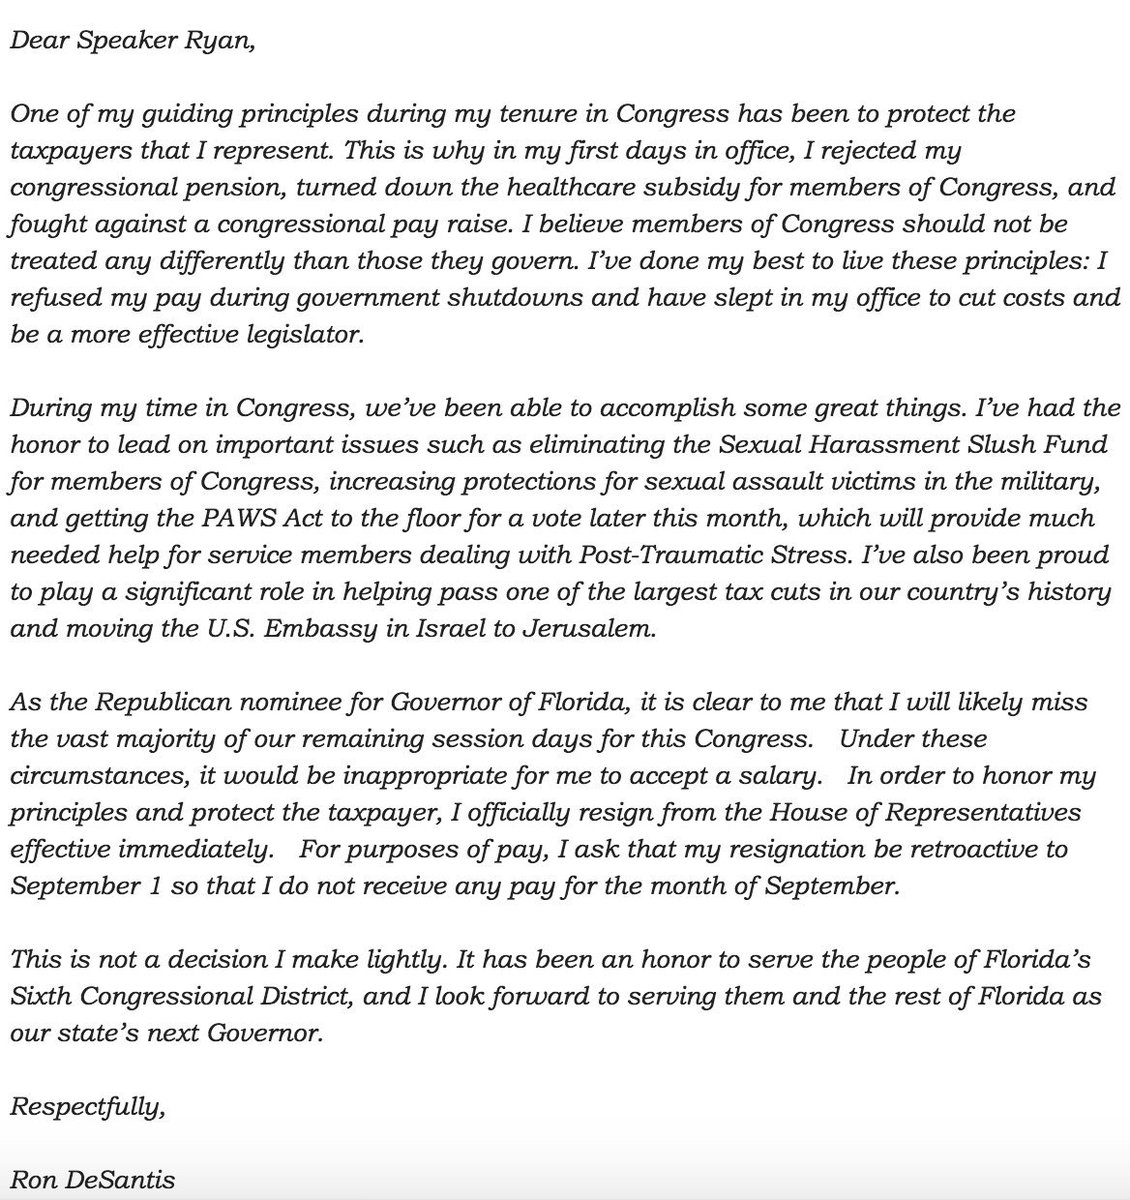 Benny on Twitter "DeSantis resignation letter says he has